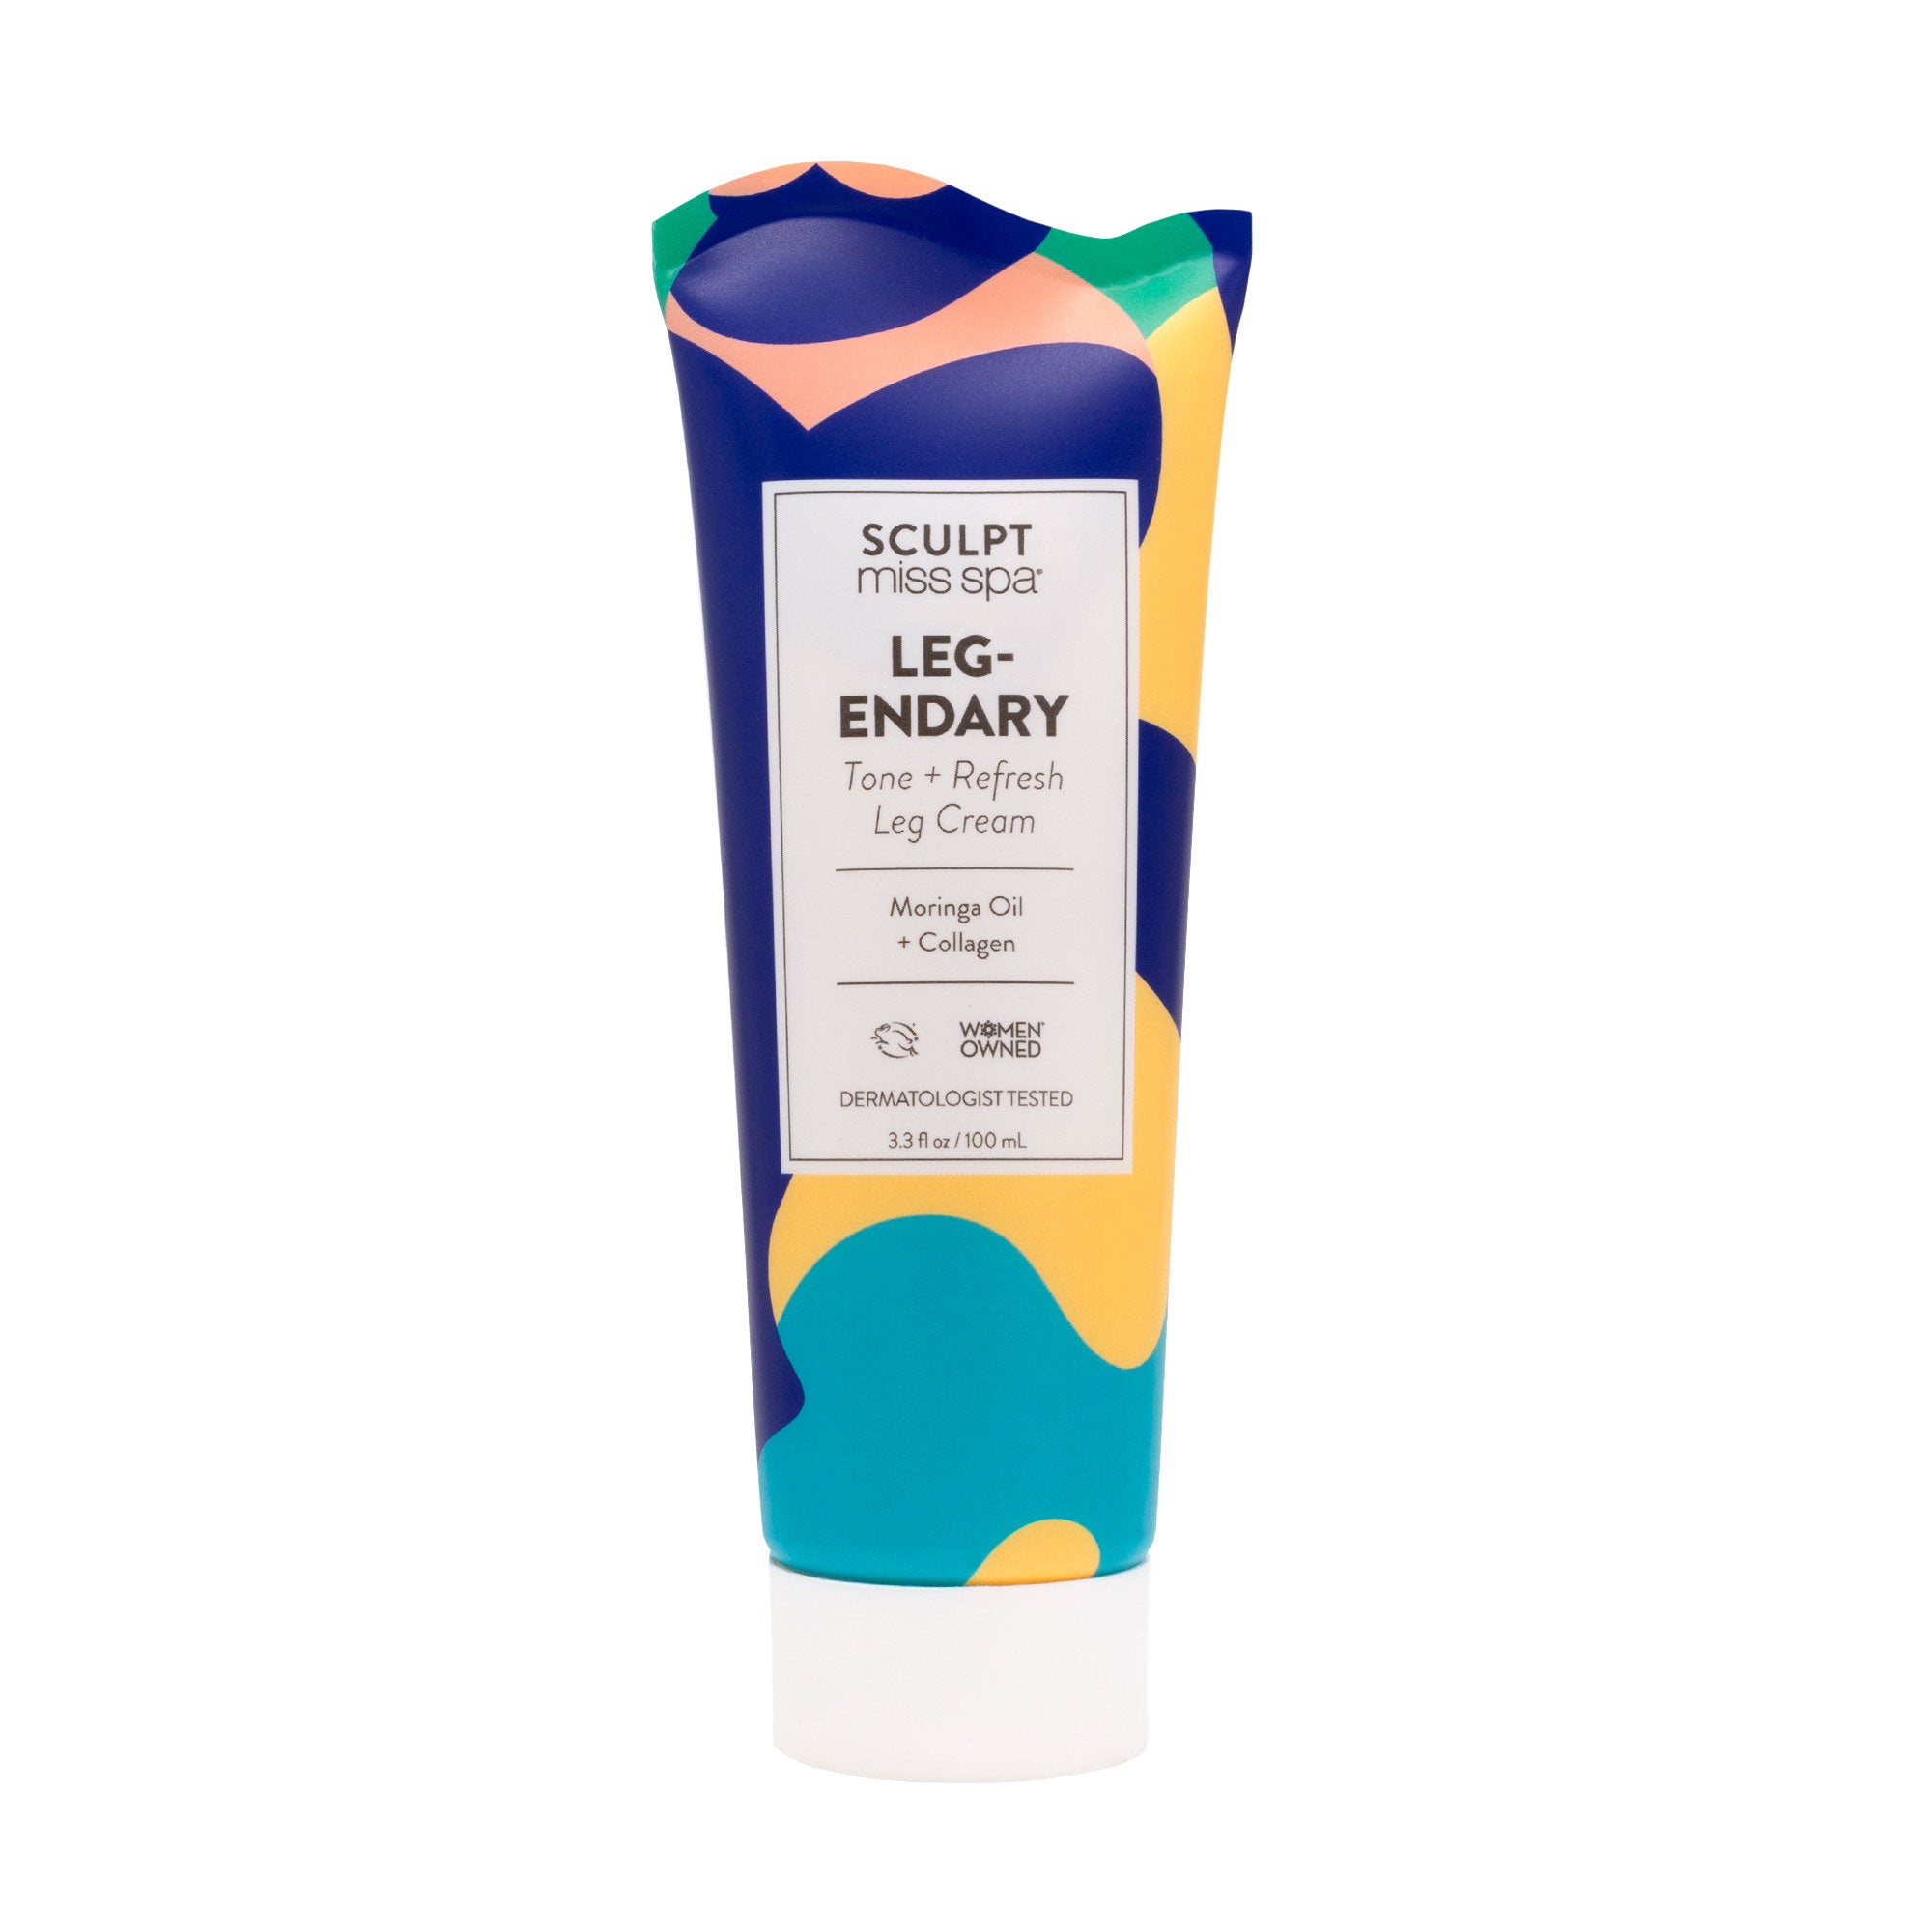 Tone + Refresh Leg Cream